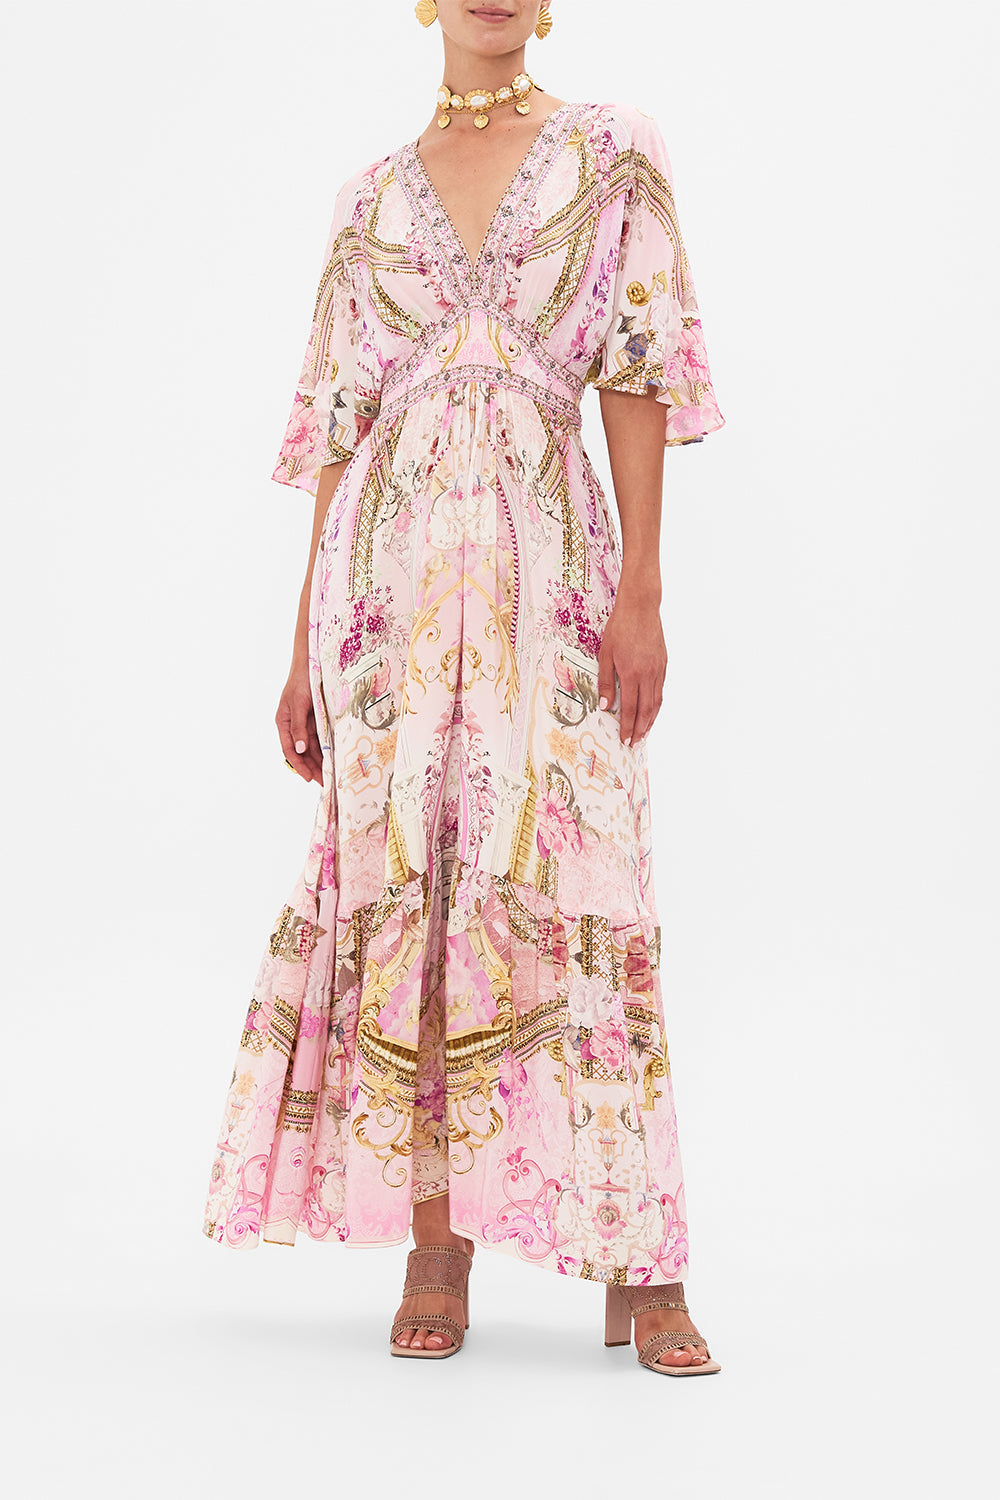 CAMILLA waisted pink ruffle dress in Fresco Fairytale print